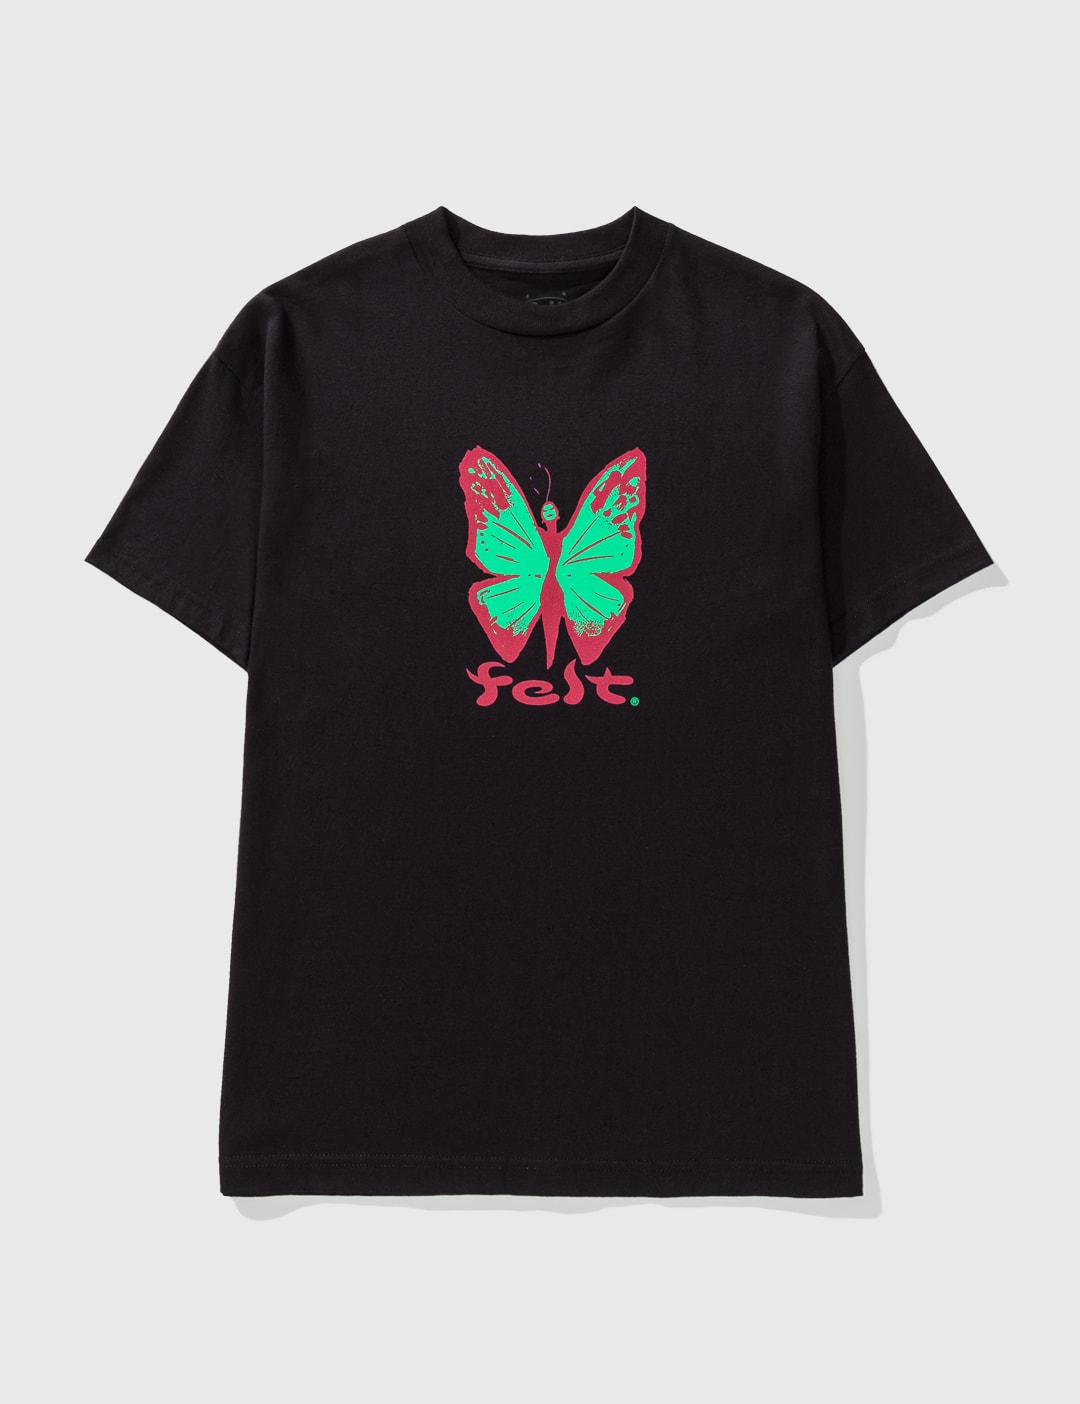 Felt - Metamorphosis T-shirt | HBX - Globally Curated Fashion and ...